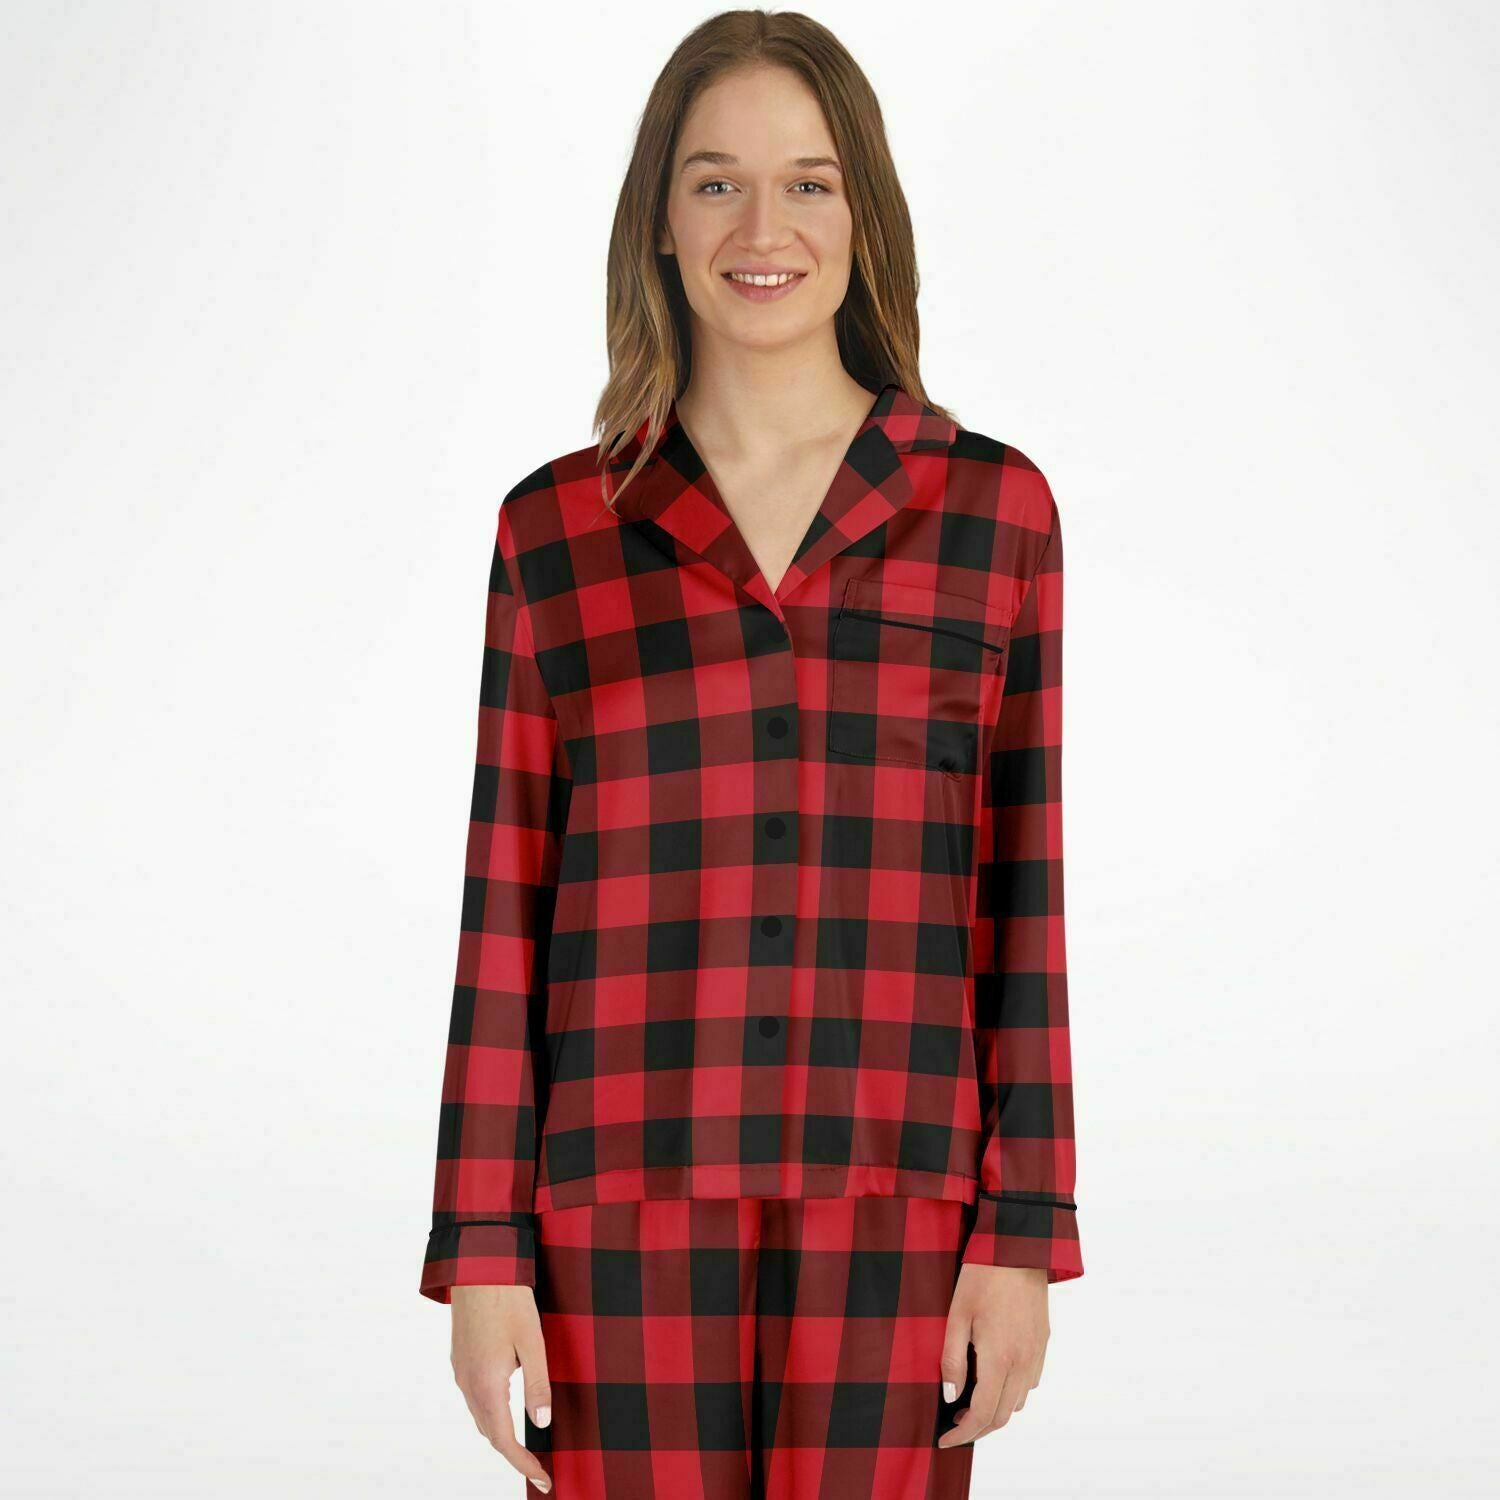 Plaid Plush Fleece Pajama Pant (Buffalo Plaid Red, Small